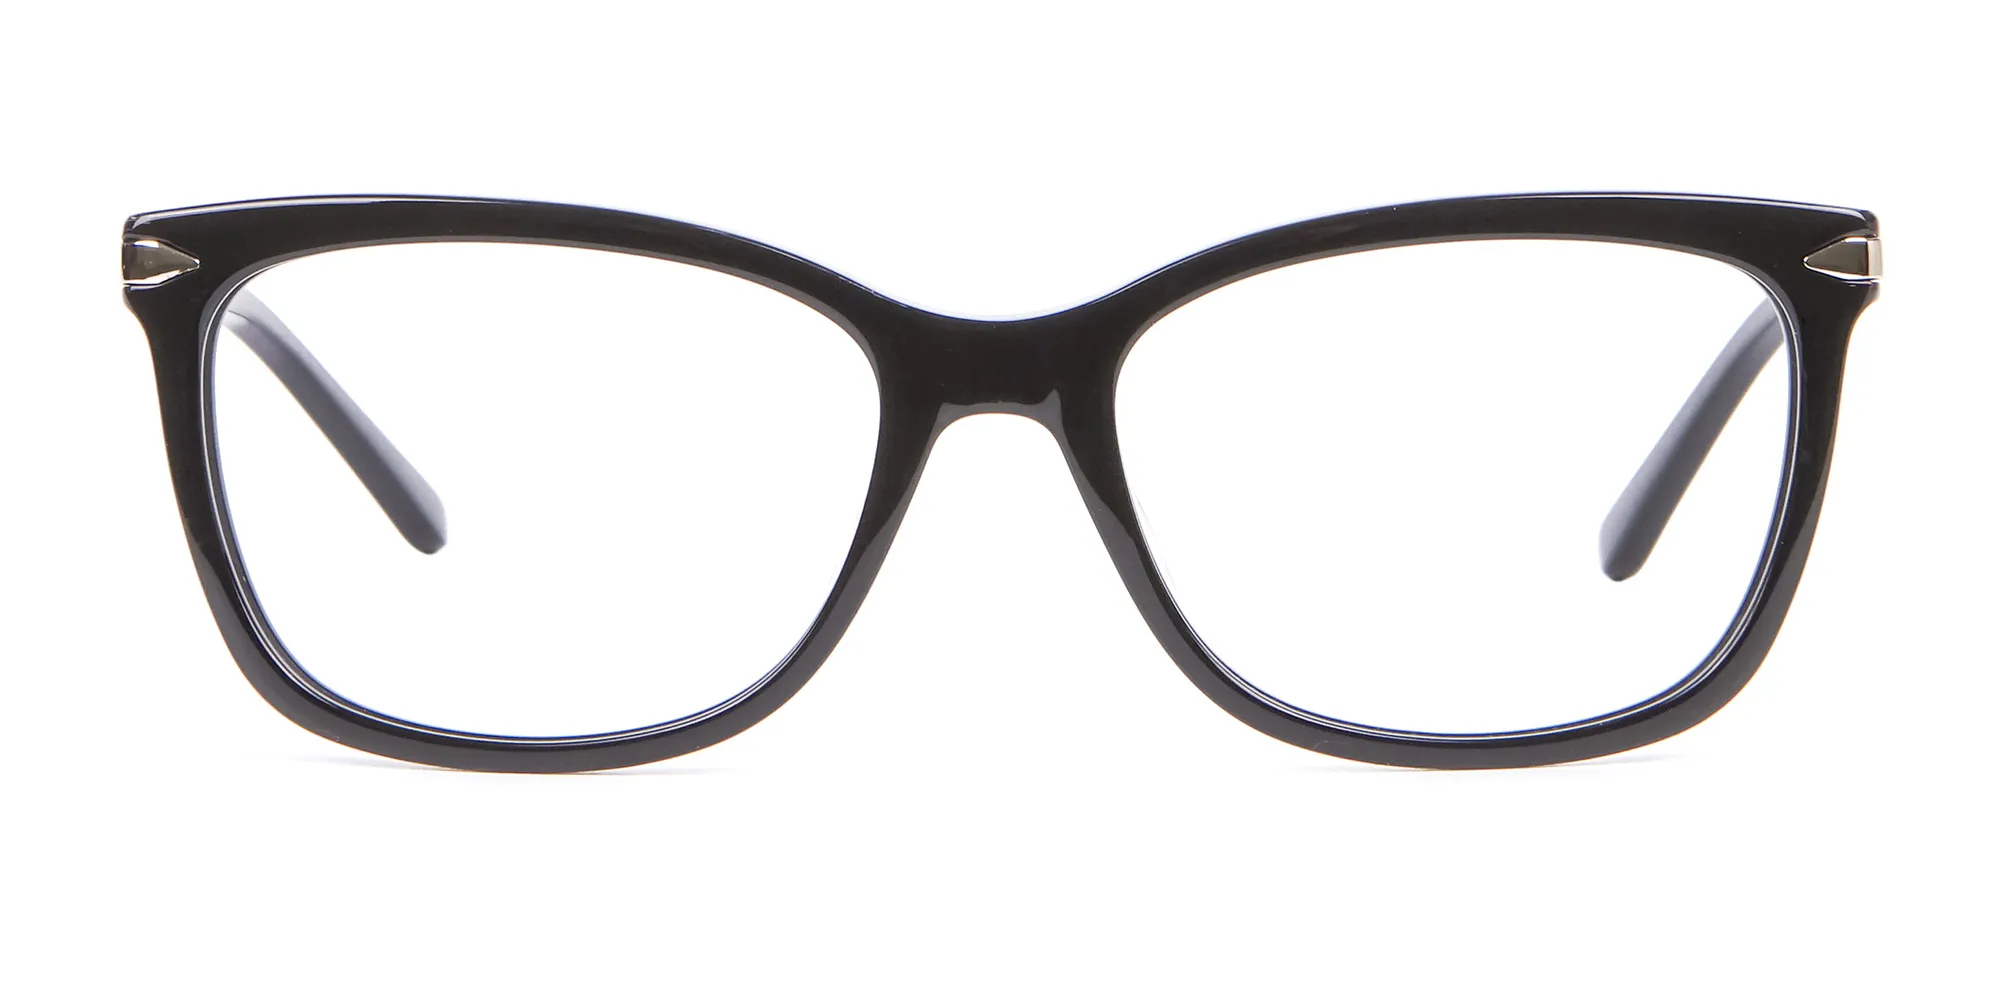 Ladies Mordern Rectangular Glasses in Black- 2